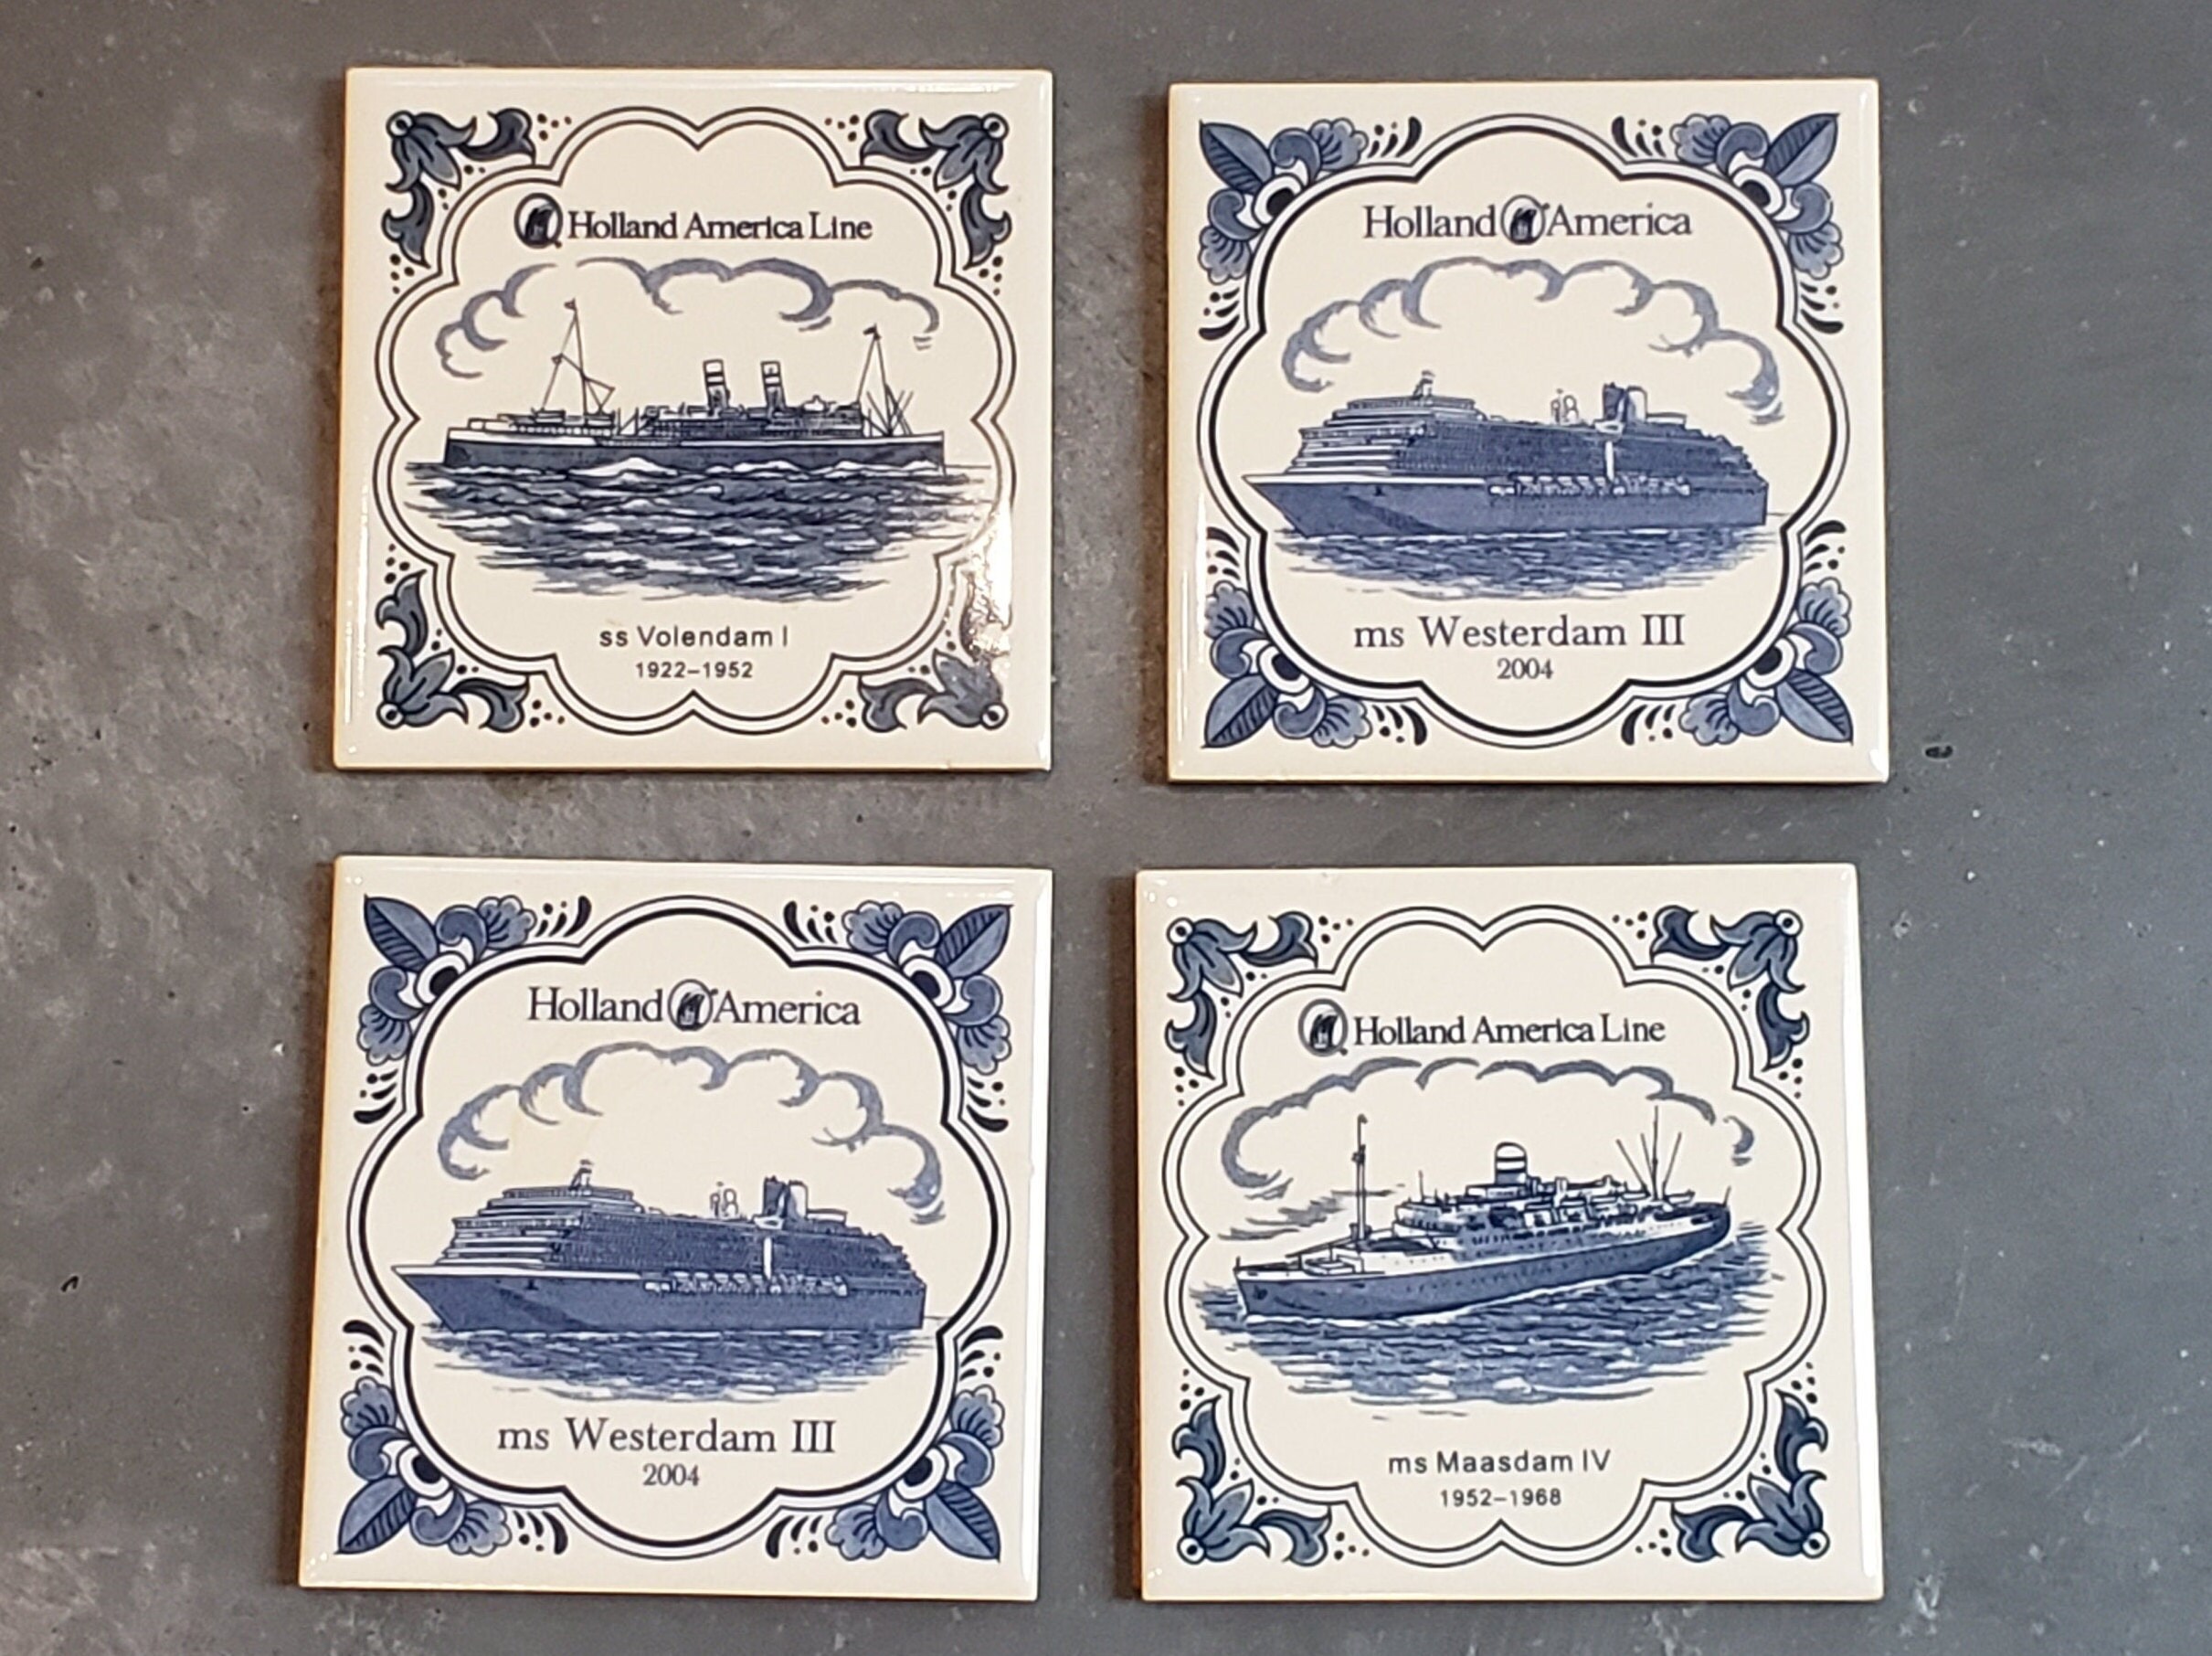 2 Vintage Holland American Line Porcelain Coasters Delft Blue Tile Cruise Ship